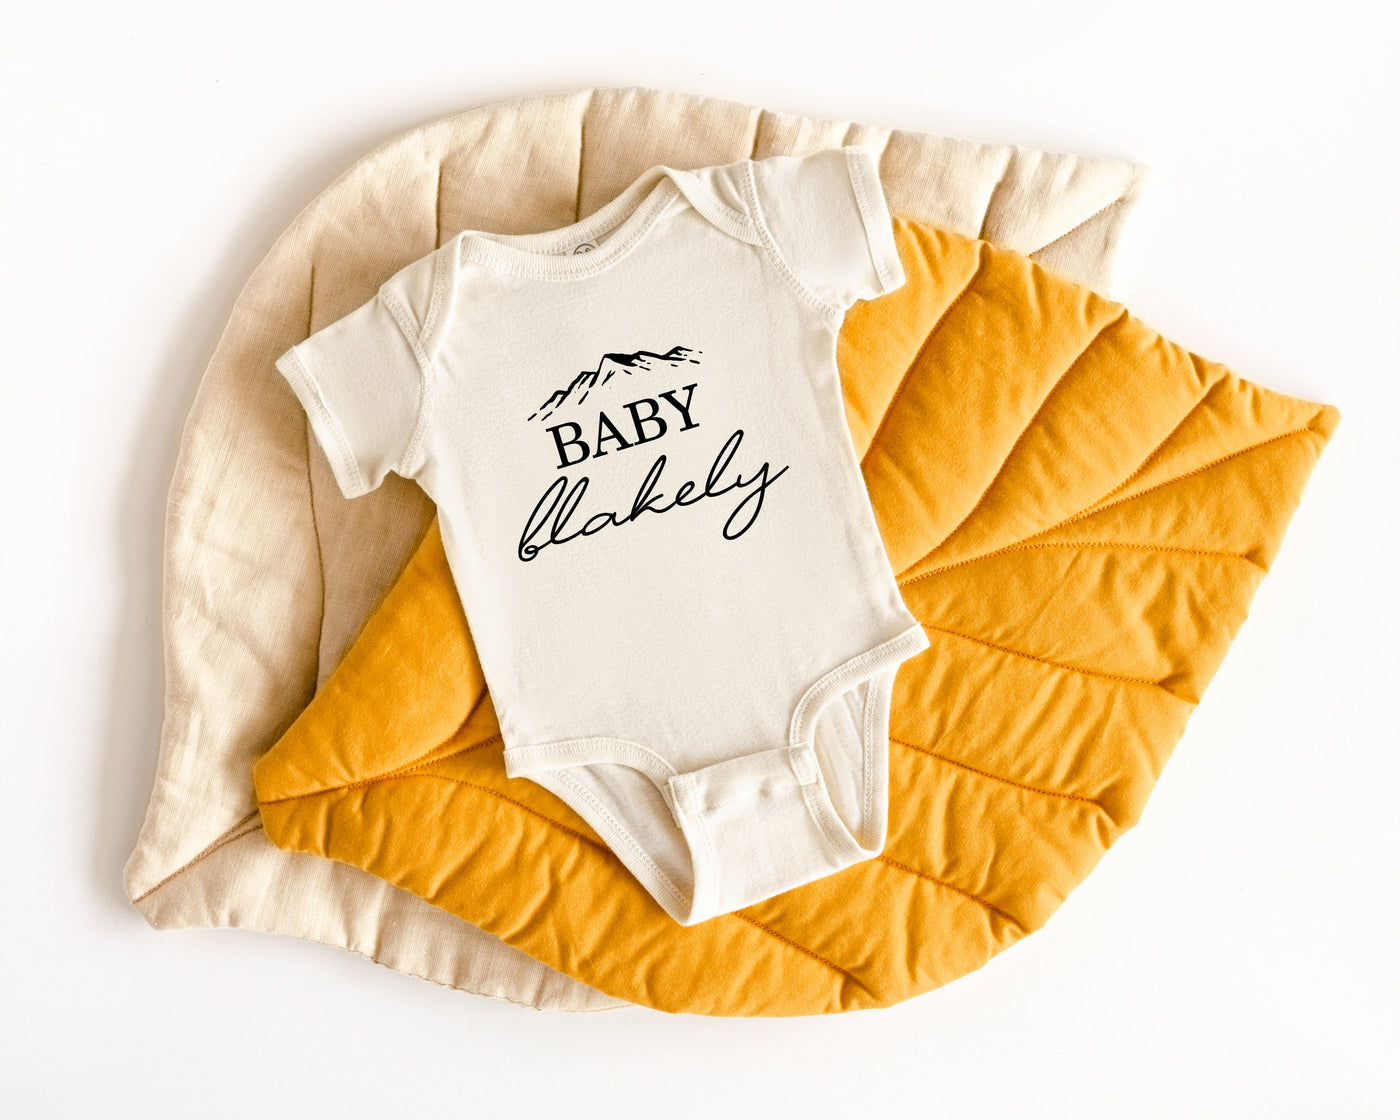 Custom Name Bodysuit, Personalized Infant Clothing, Personalized Name Bodysuit, Baby Name Bodysuit, Personalized Baby Bodysuit, Baby Apparel